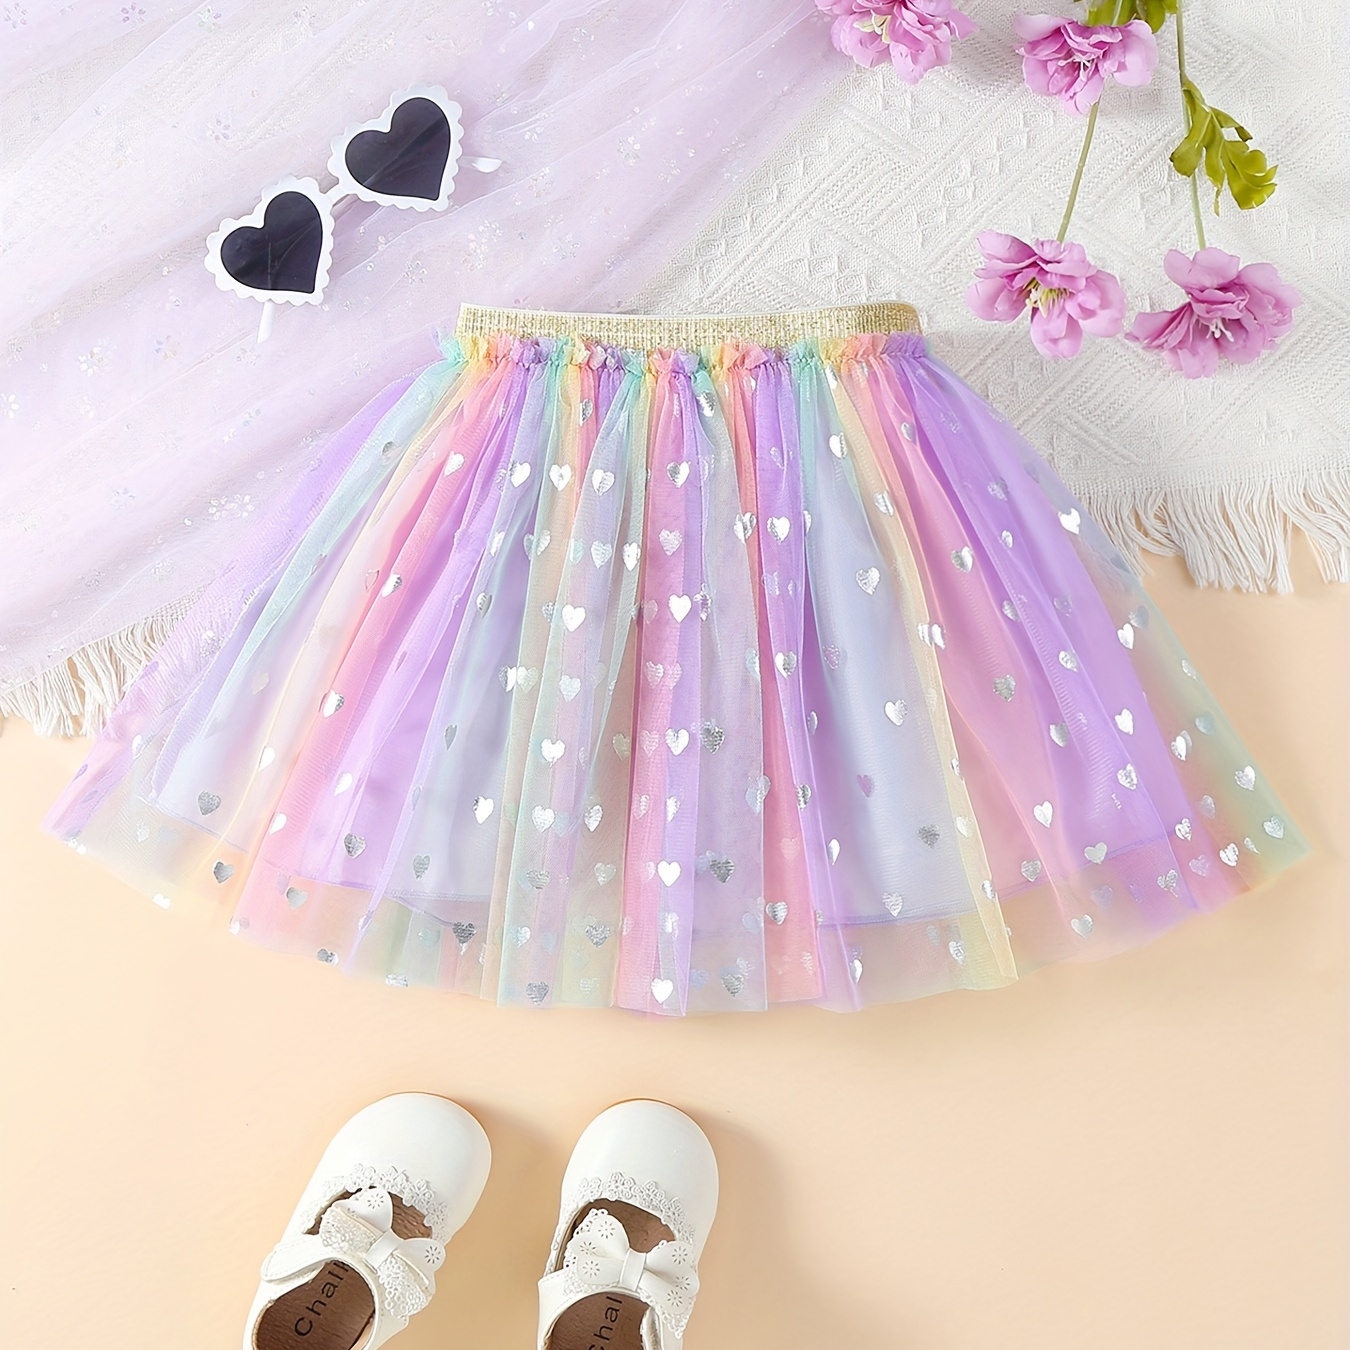 

Girls Dreamy Sequin Tutu Skirt Heart Sequin Decor Princess Mesh Skirt For Summer Party Birthday Dance